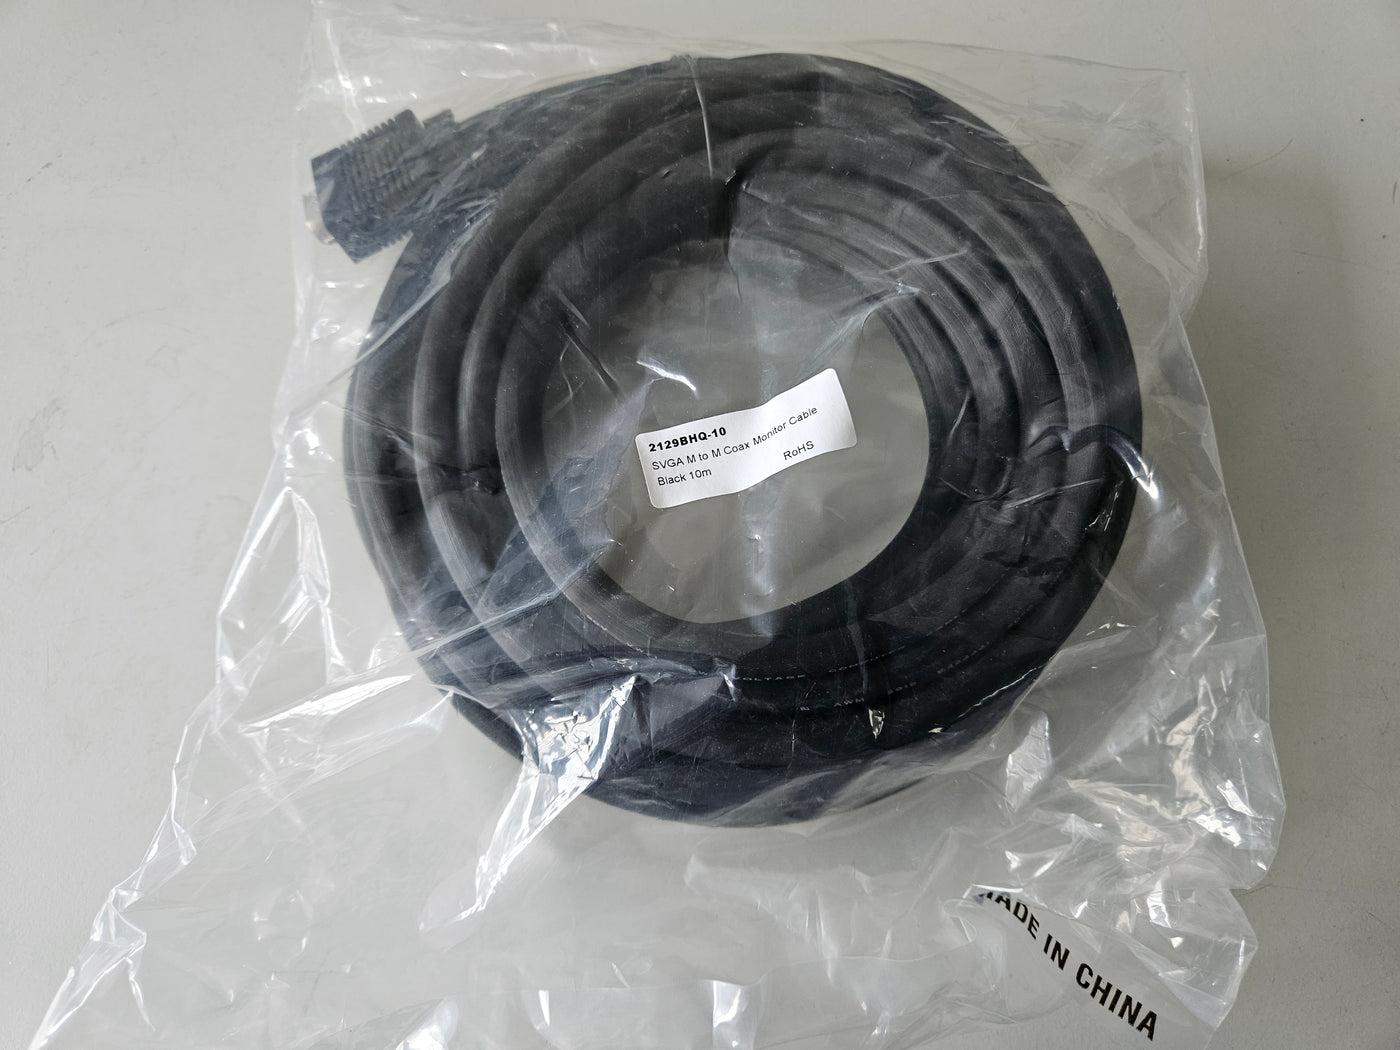 Videk SVGA Male to Male Coax Monitor Cable - Blk 10m ( 2129BHQ-10 ) NEW